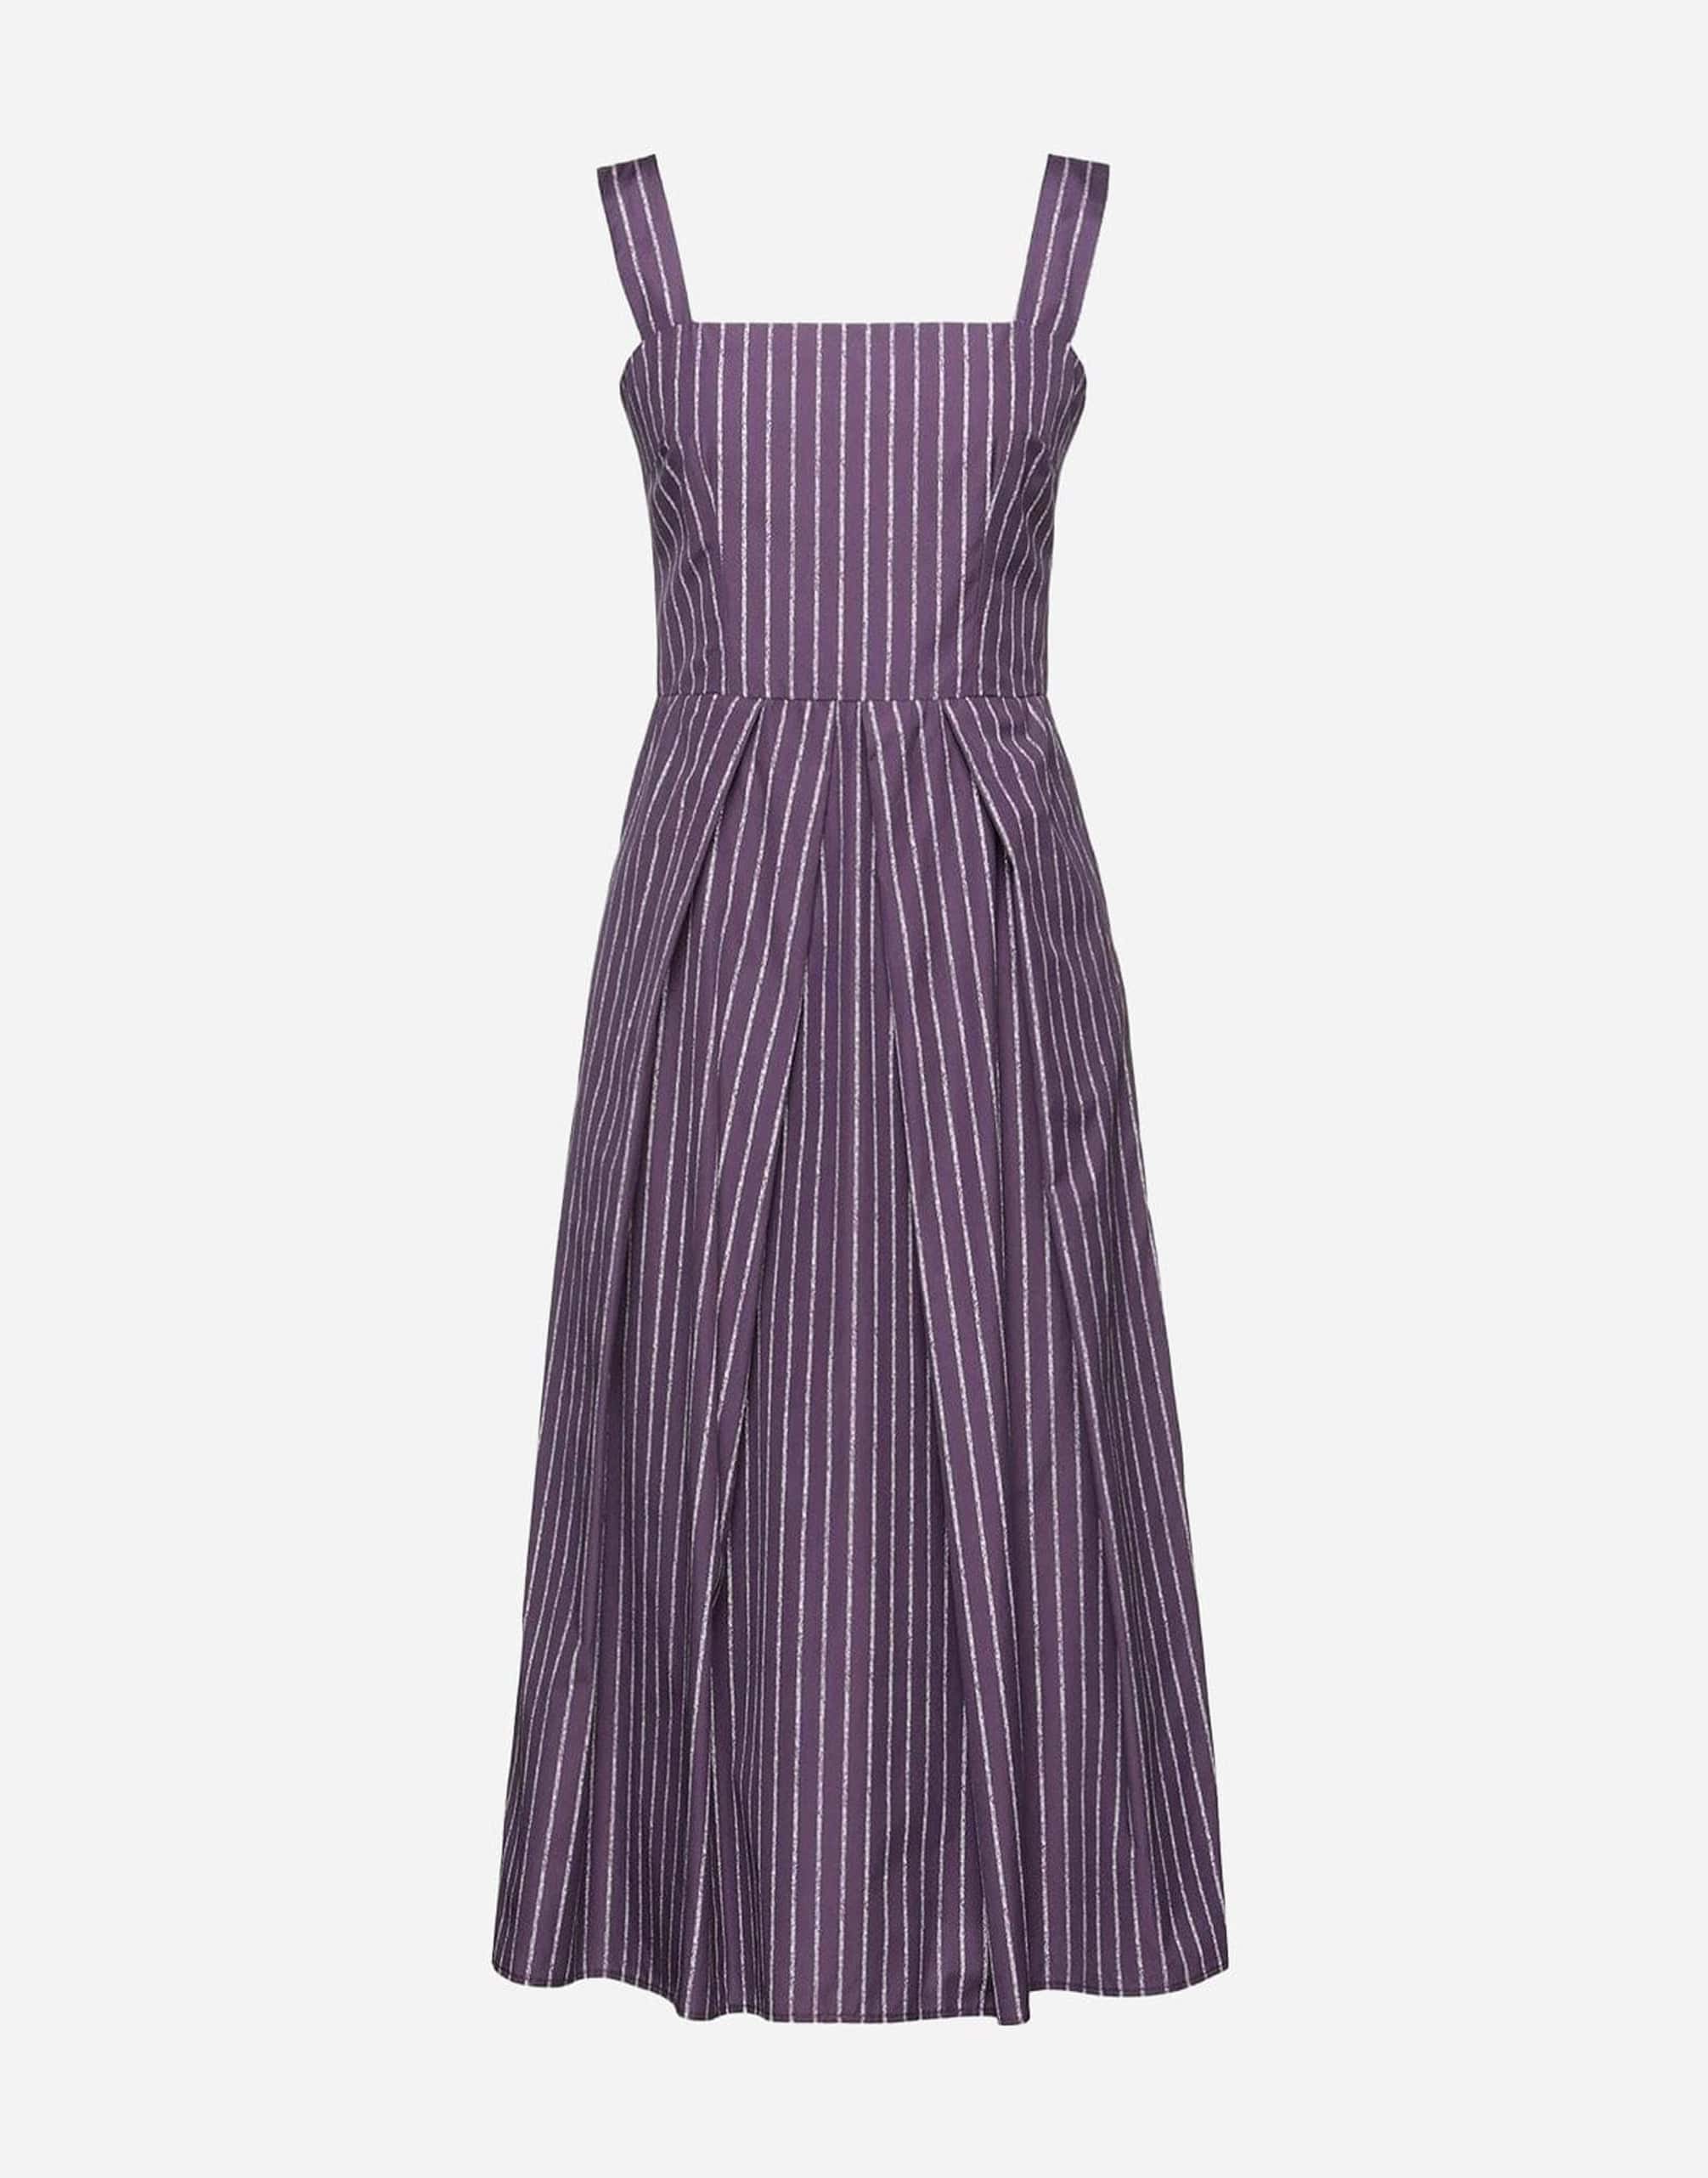 Dolce & Gabbana Striped A-Line Midi Dress